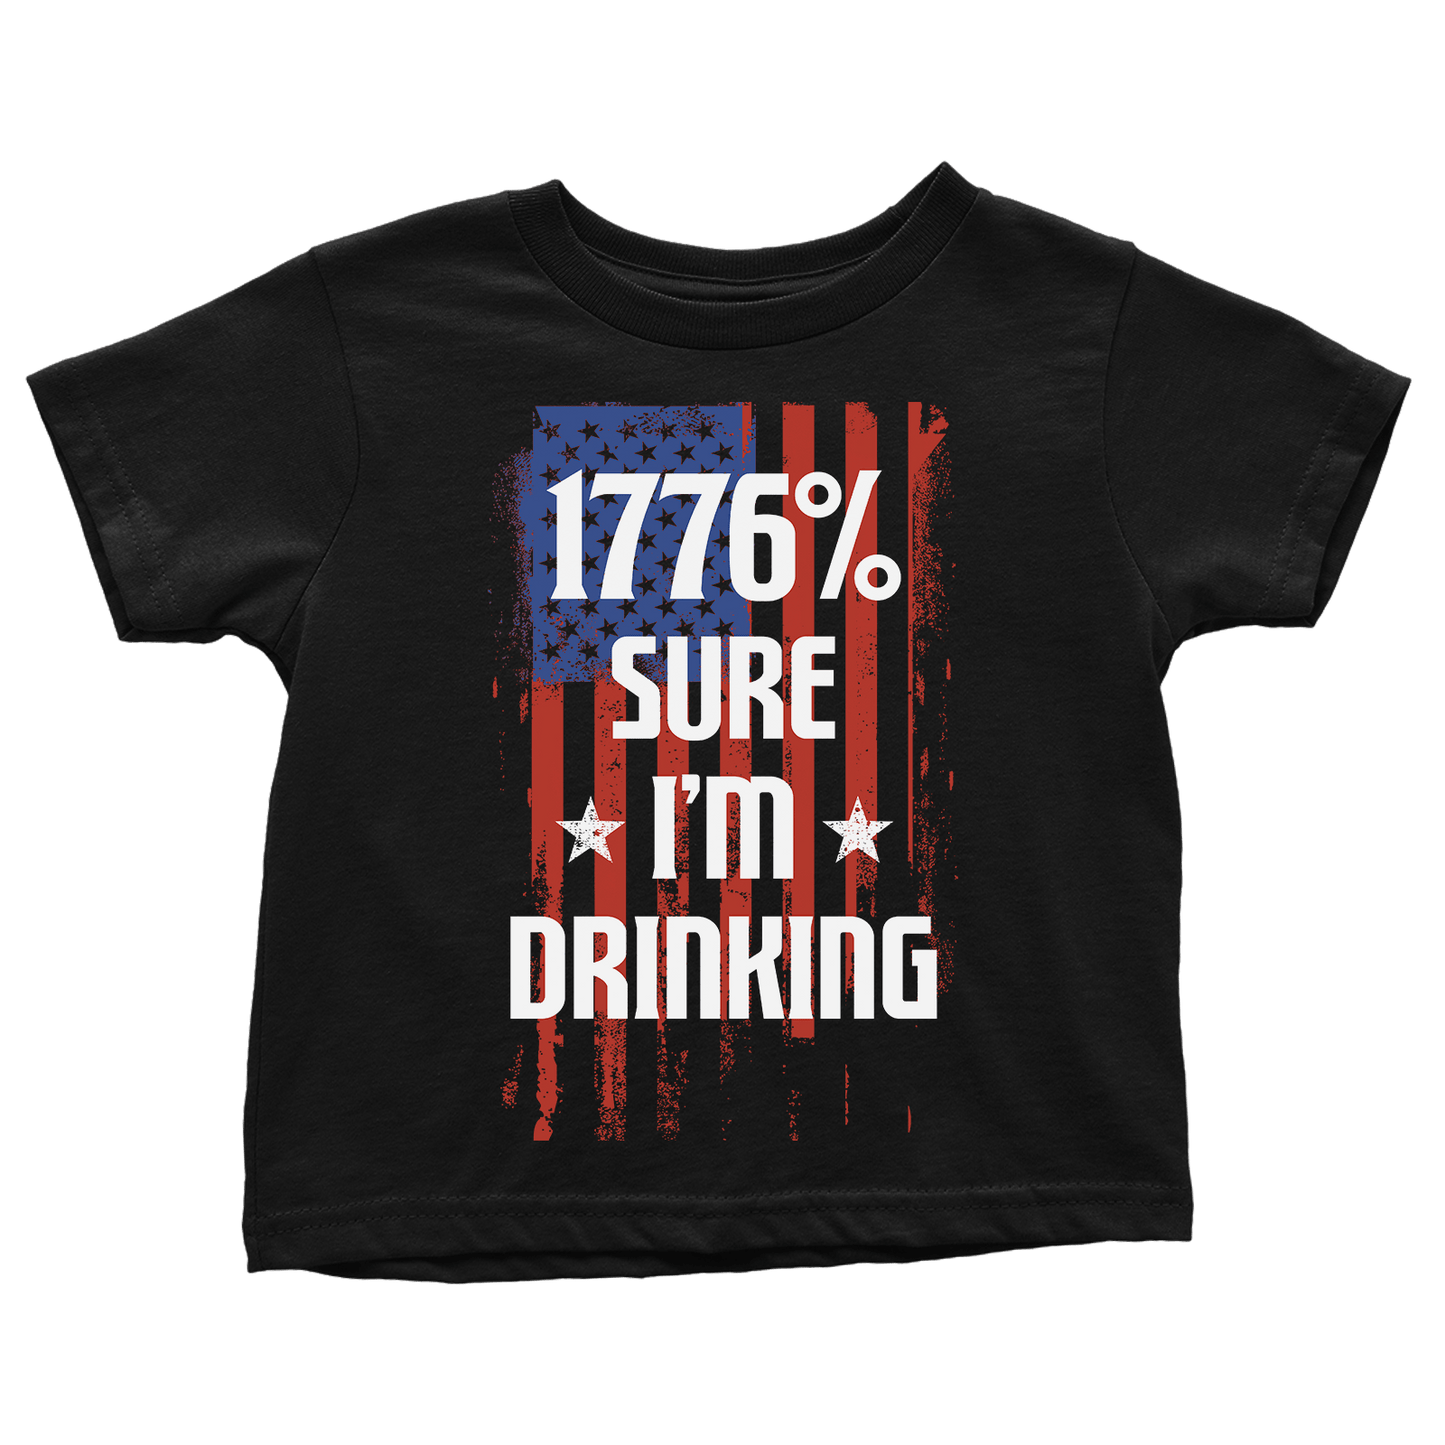 Apparel Premium Toddler Shirt / Black / 2T 1776 Percent Sure I'm Drinking - Toddlers